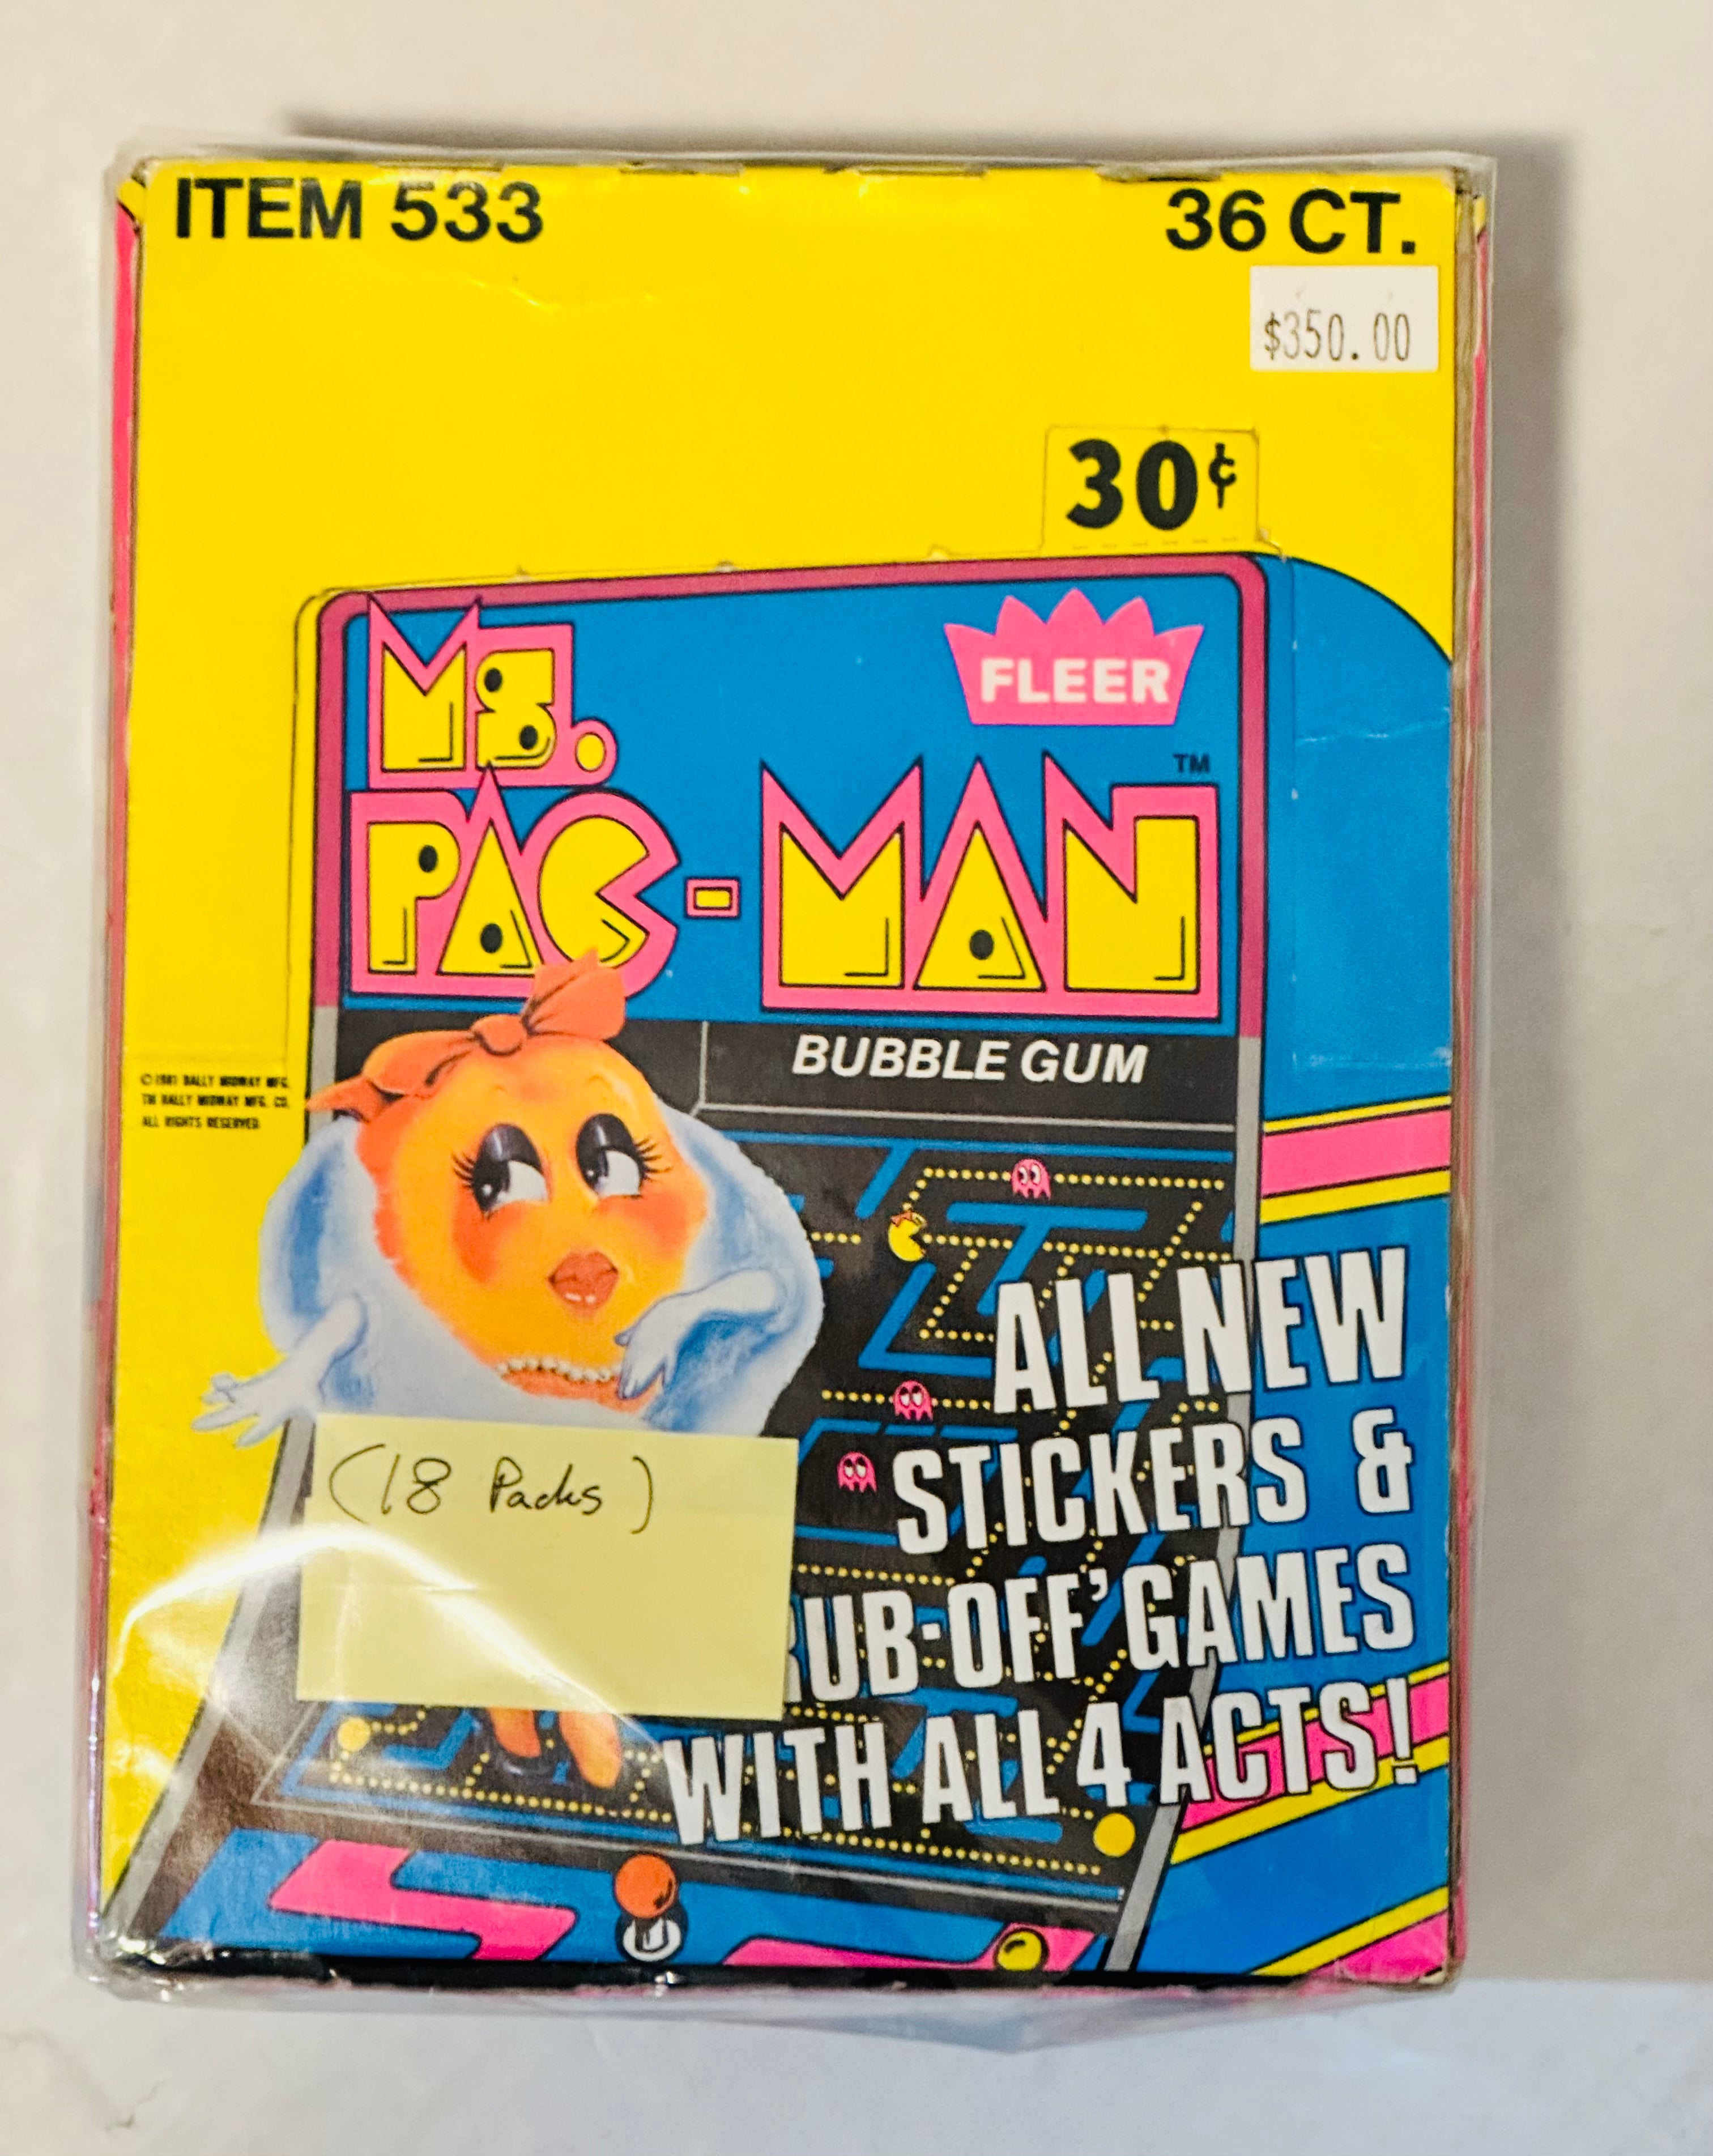 Ms. PAC-Man 18 packs of card box 1981